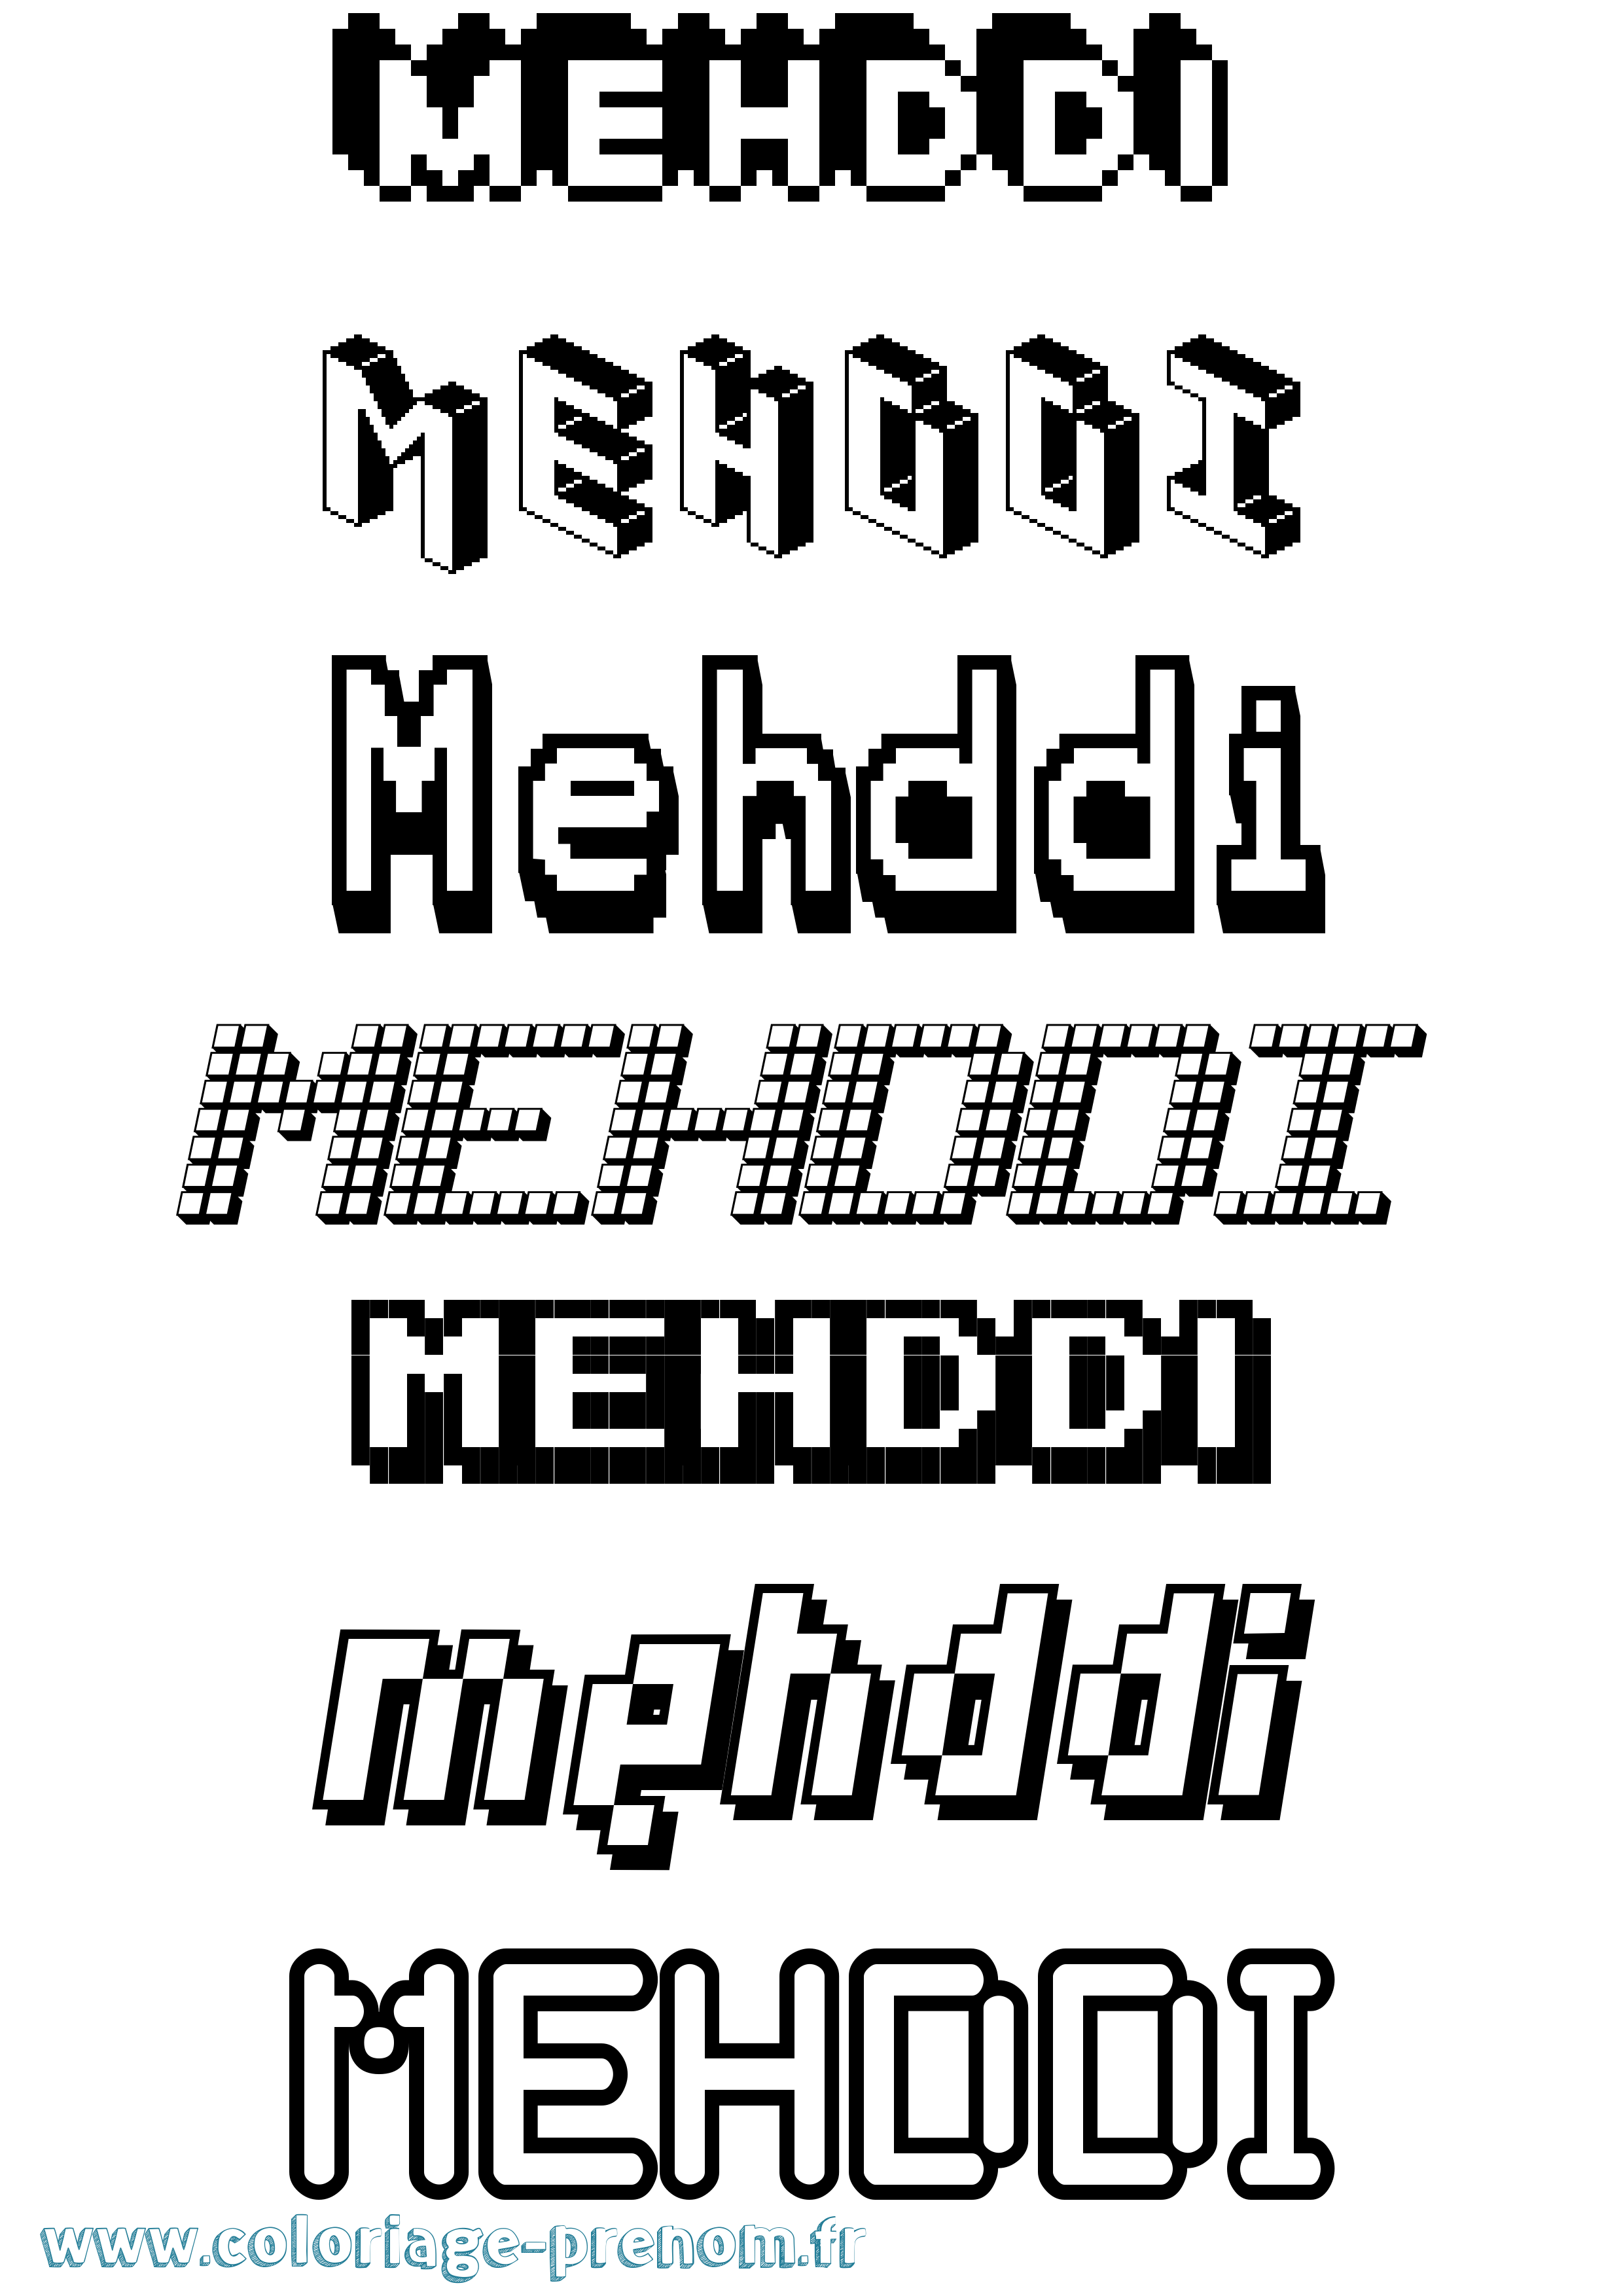 Coloriage prénom Mehddi Pixel